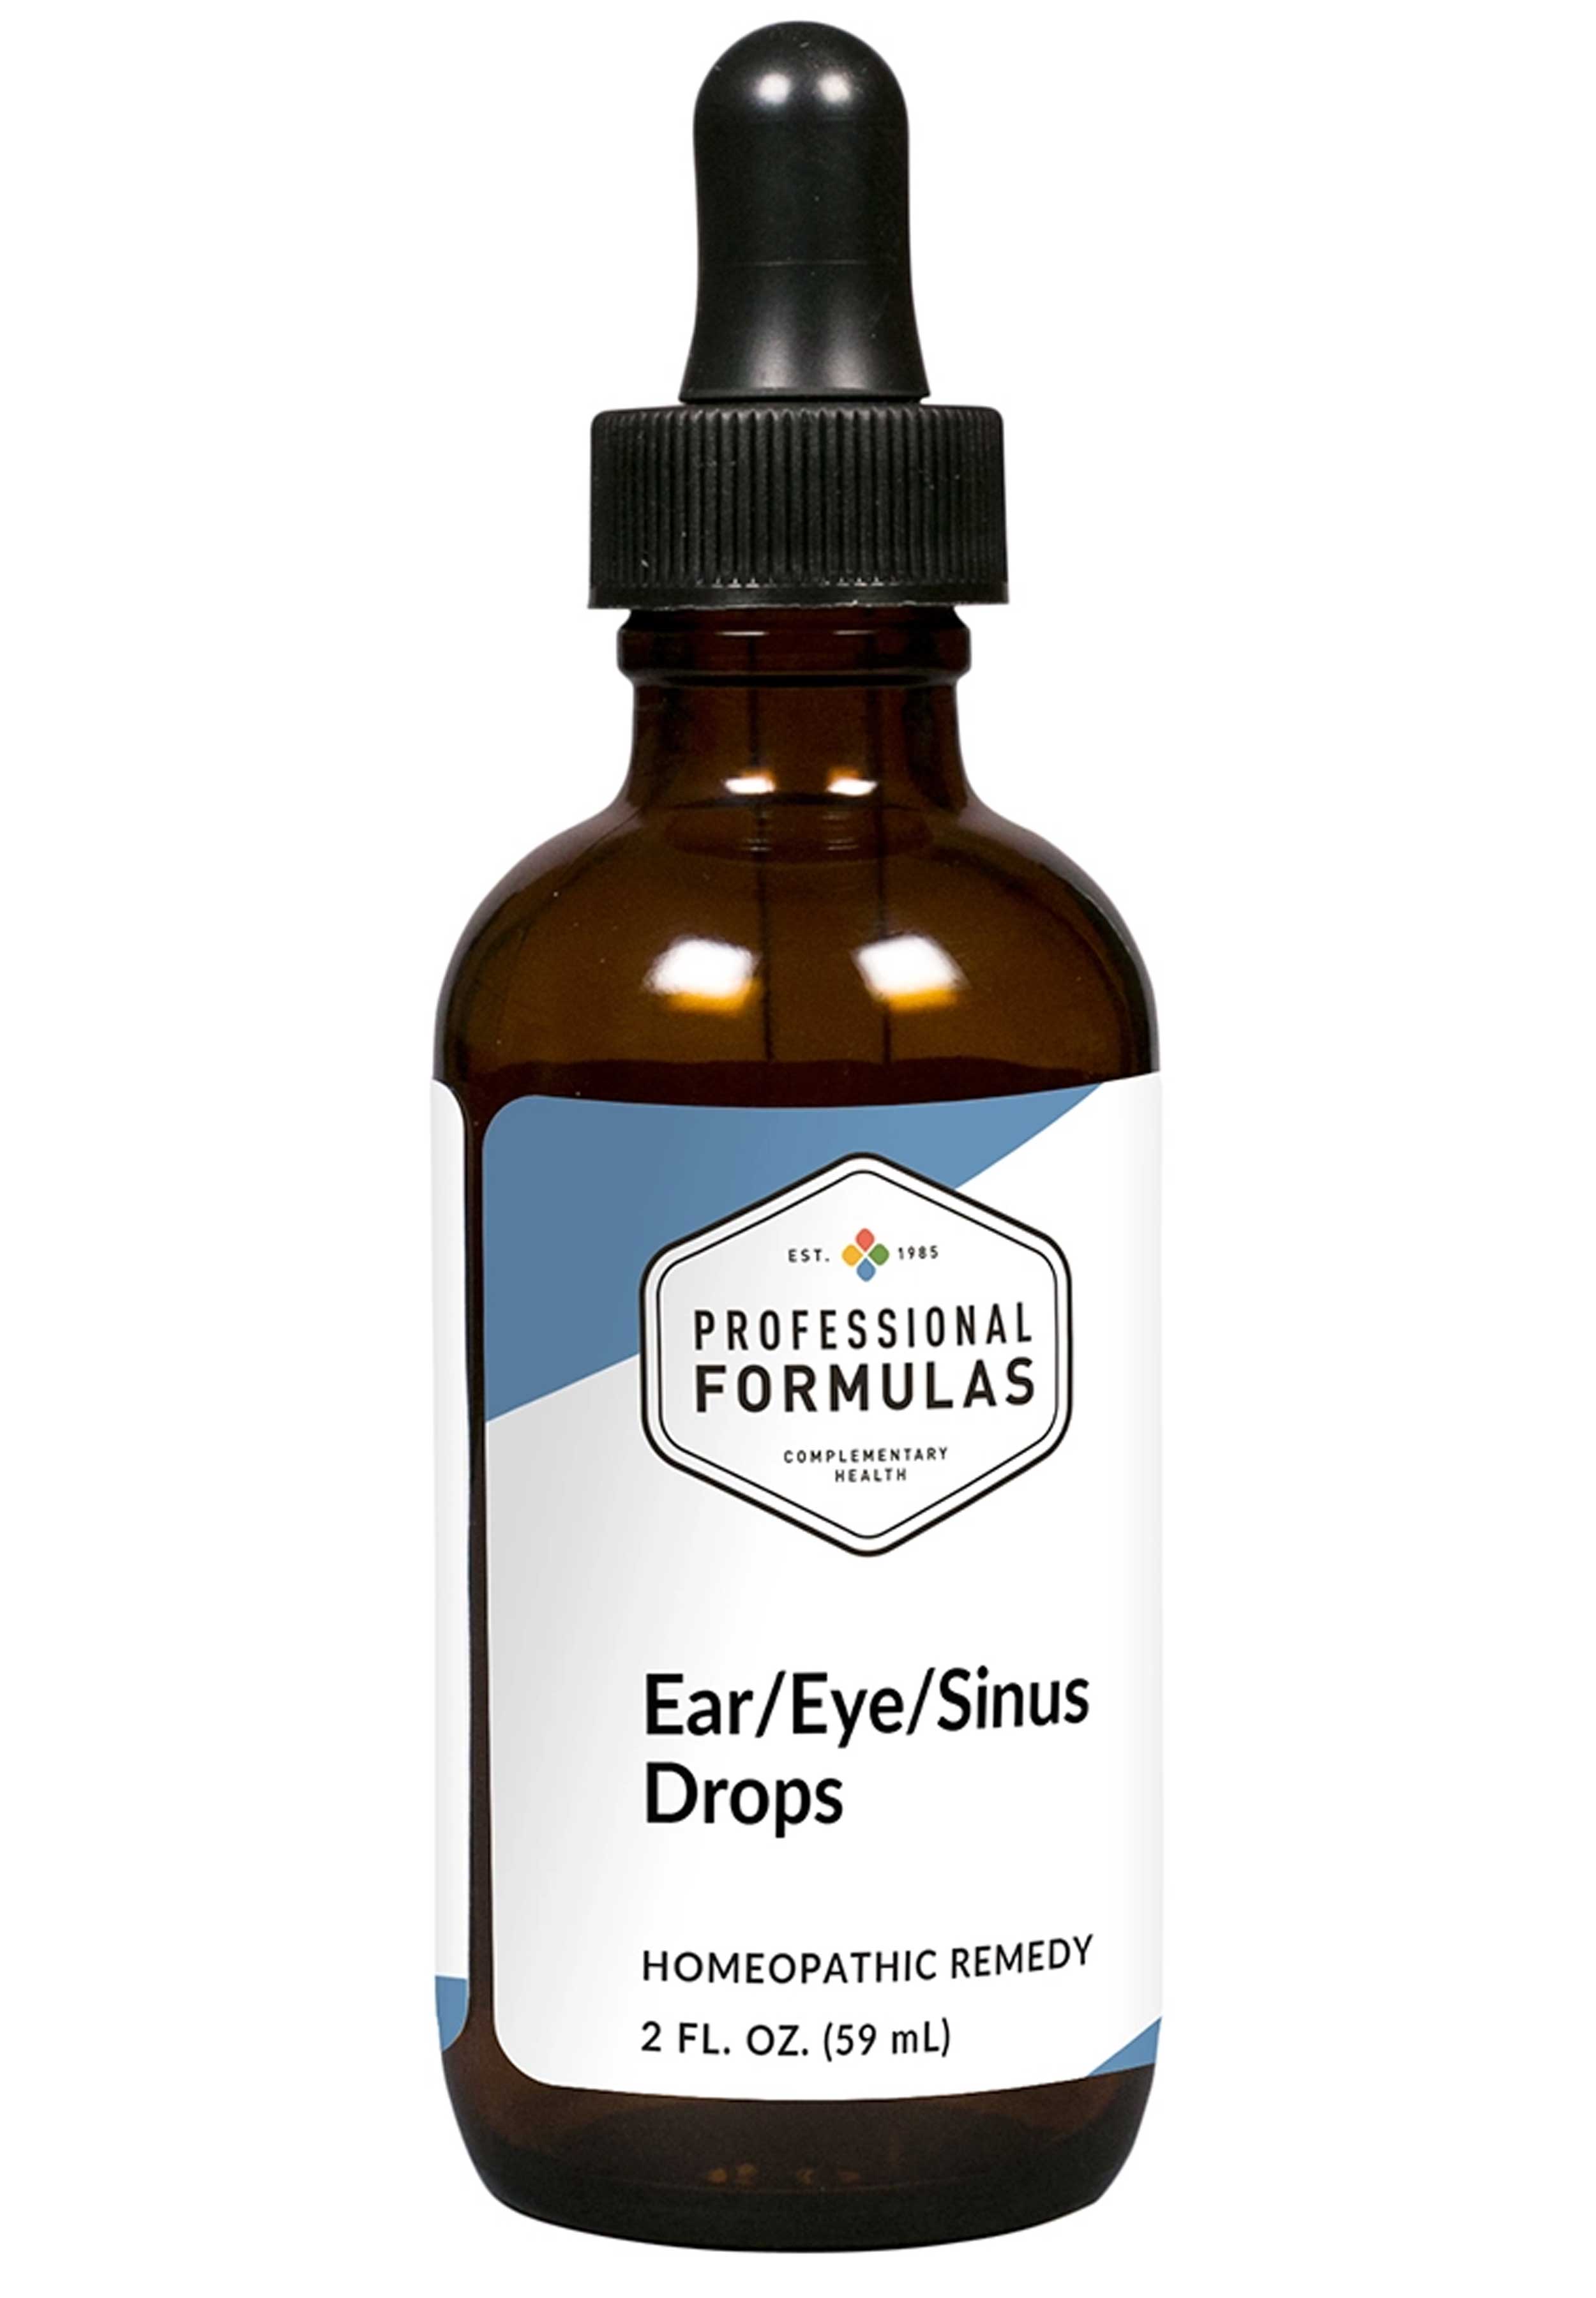 Professional Formulas Ear/Eye/Sinus Drops